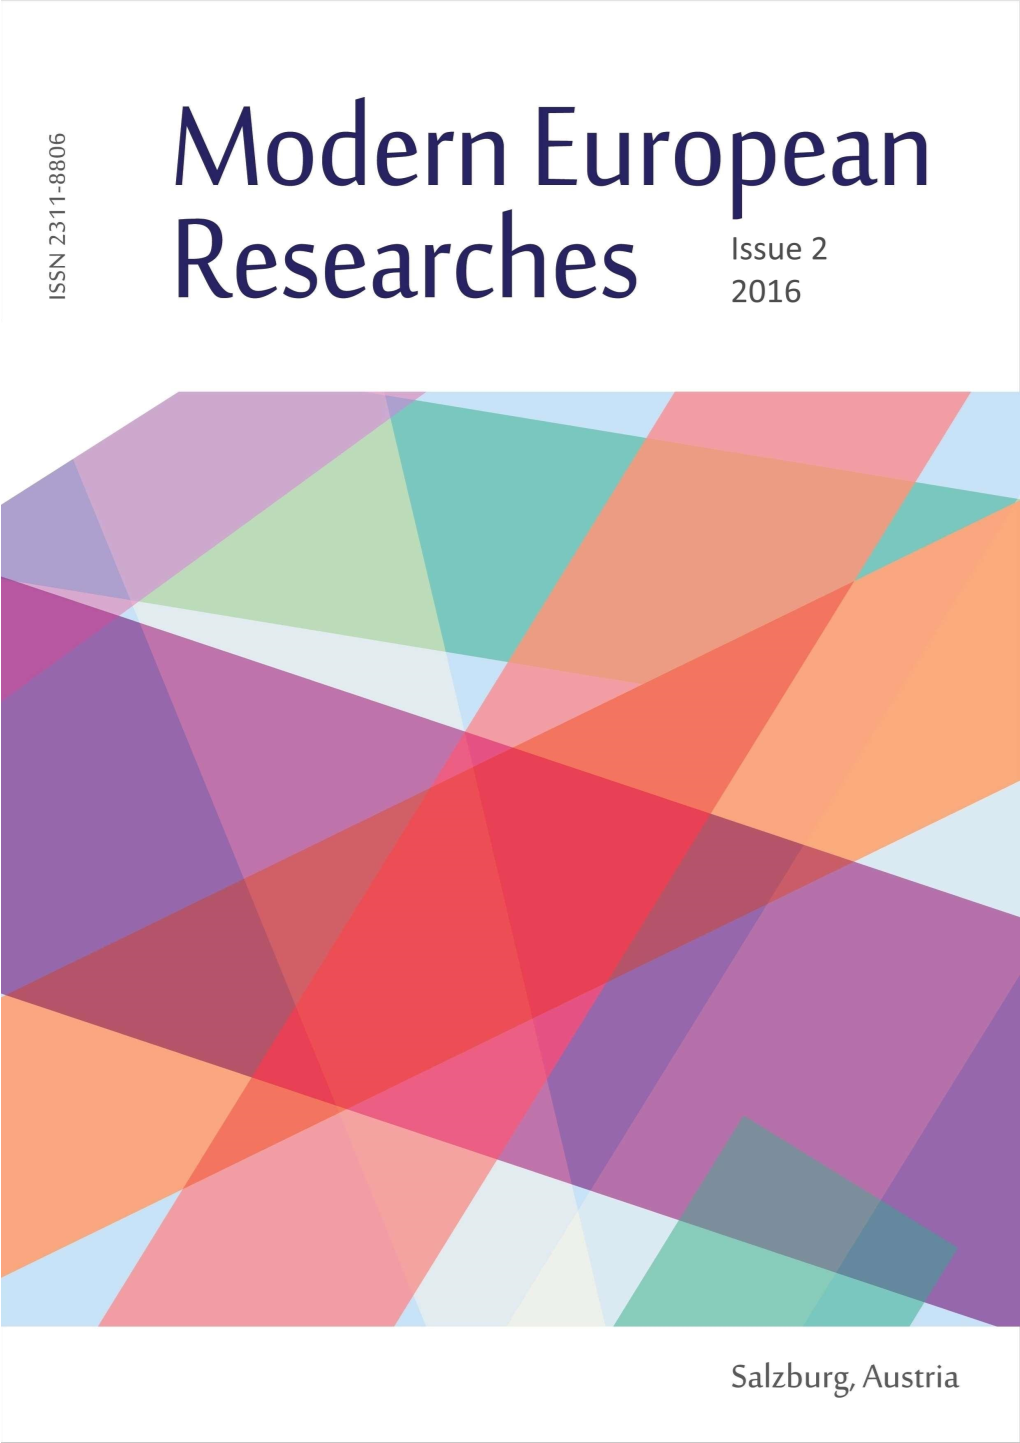 Modern European Researches (2016) Issue 2, 112 P